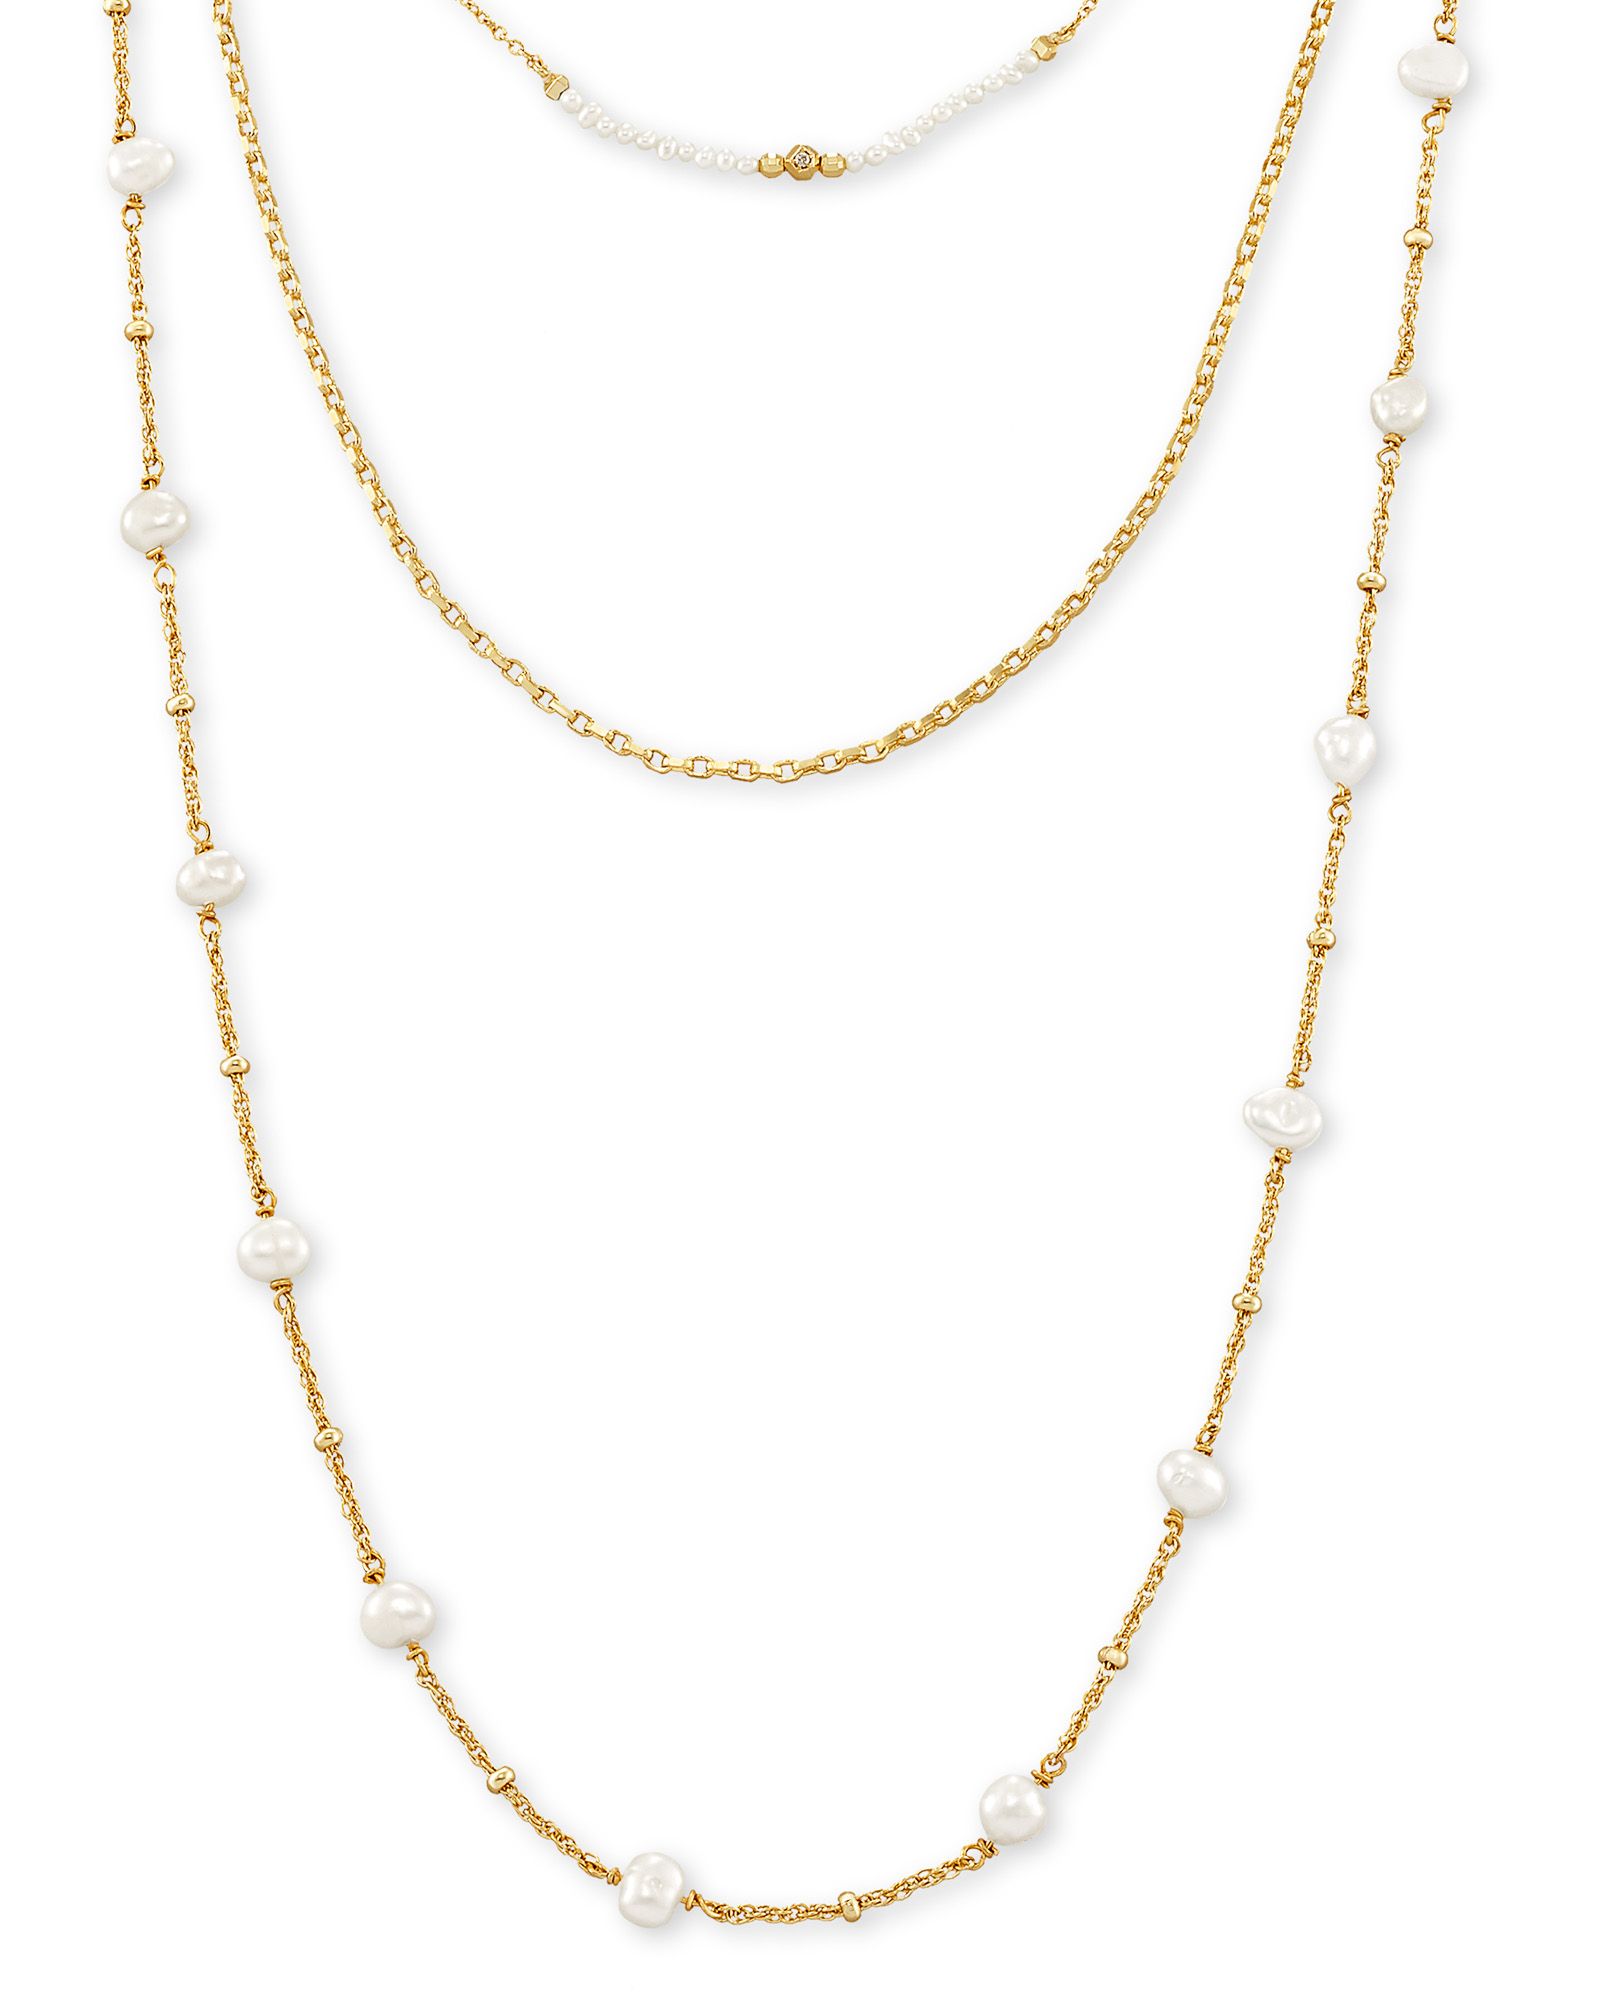 Scarlet Gold Multi Strand Necklace in White Pearl | Kendra Scott